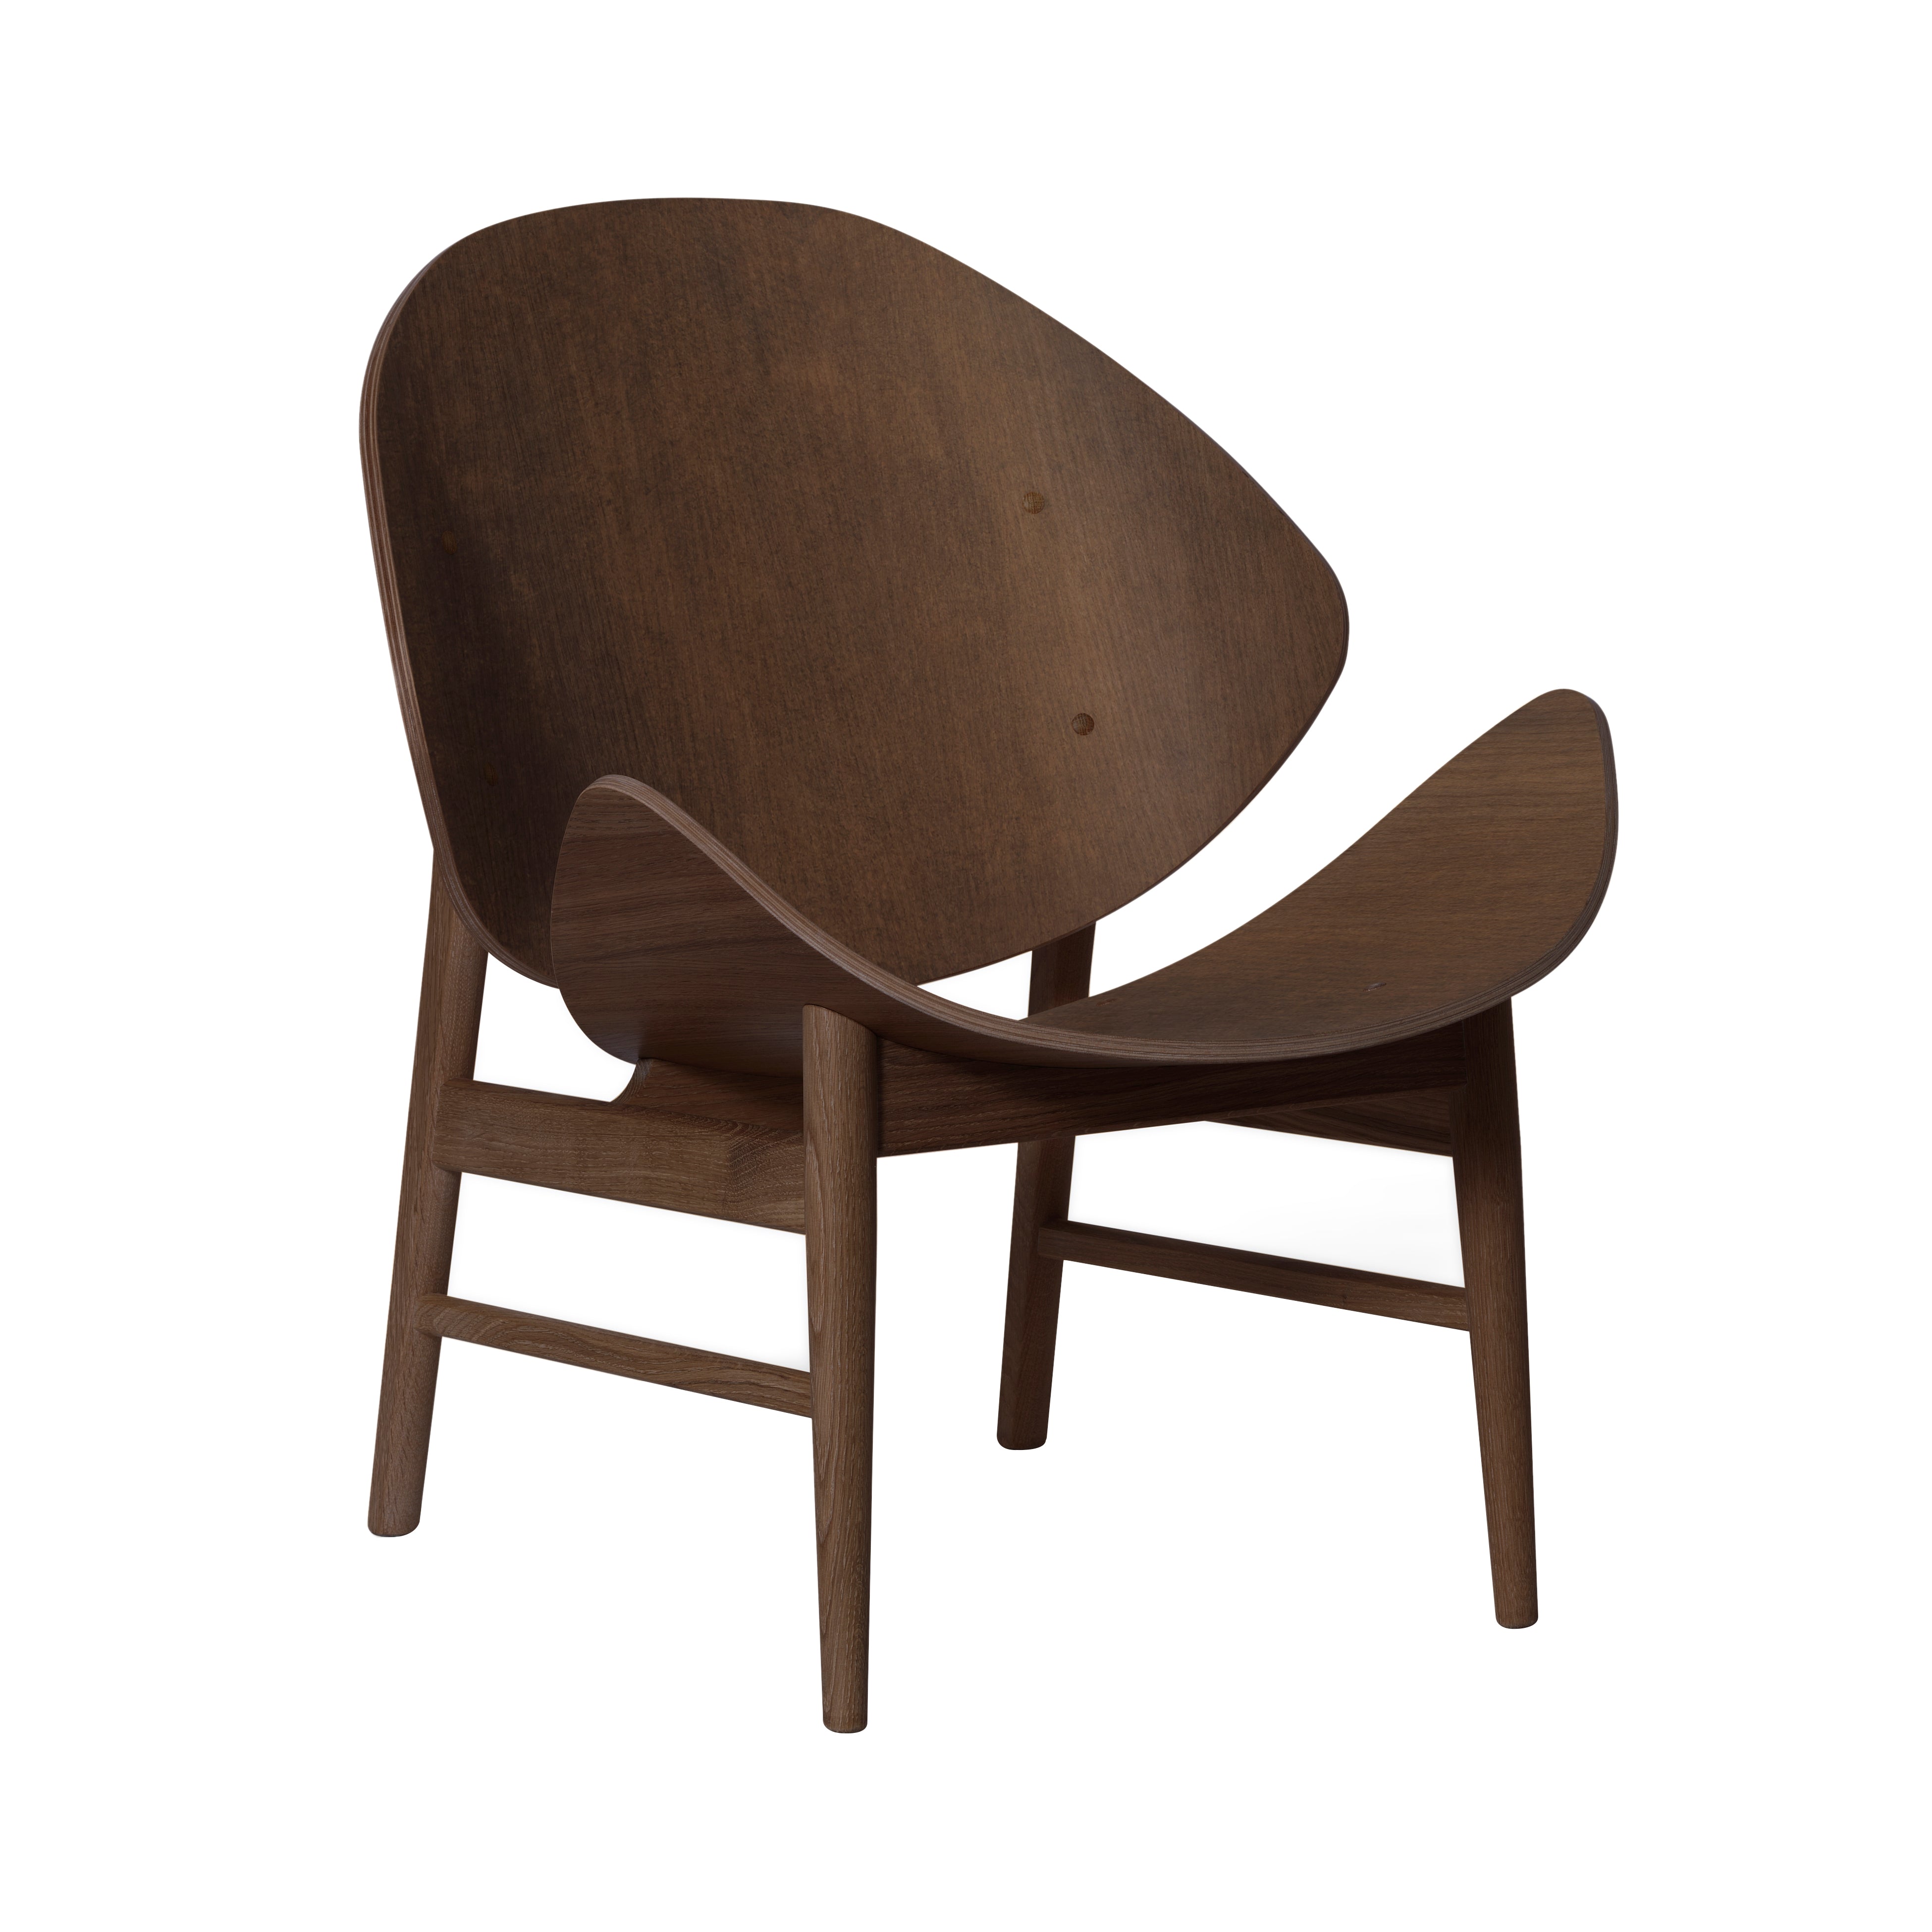 The Orange Lounge Chair: Smoked Oiled Oak